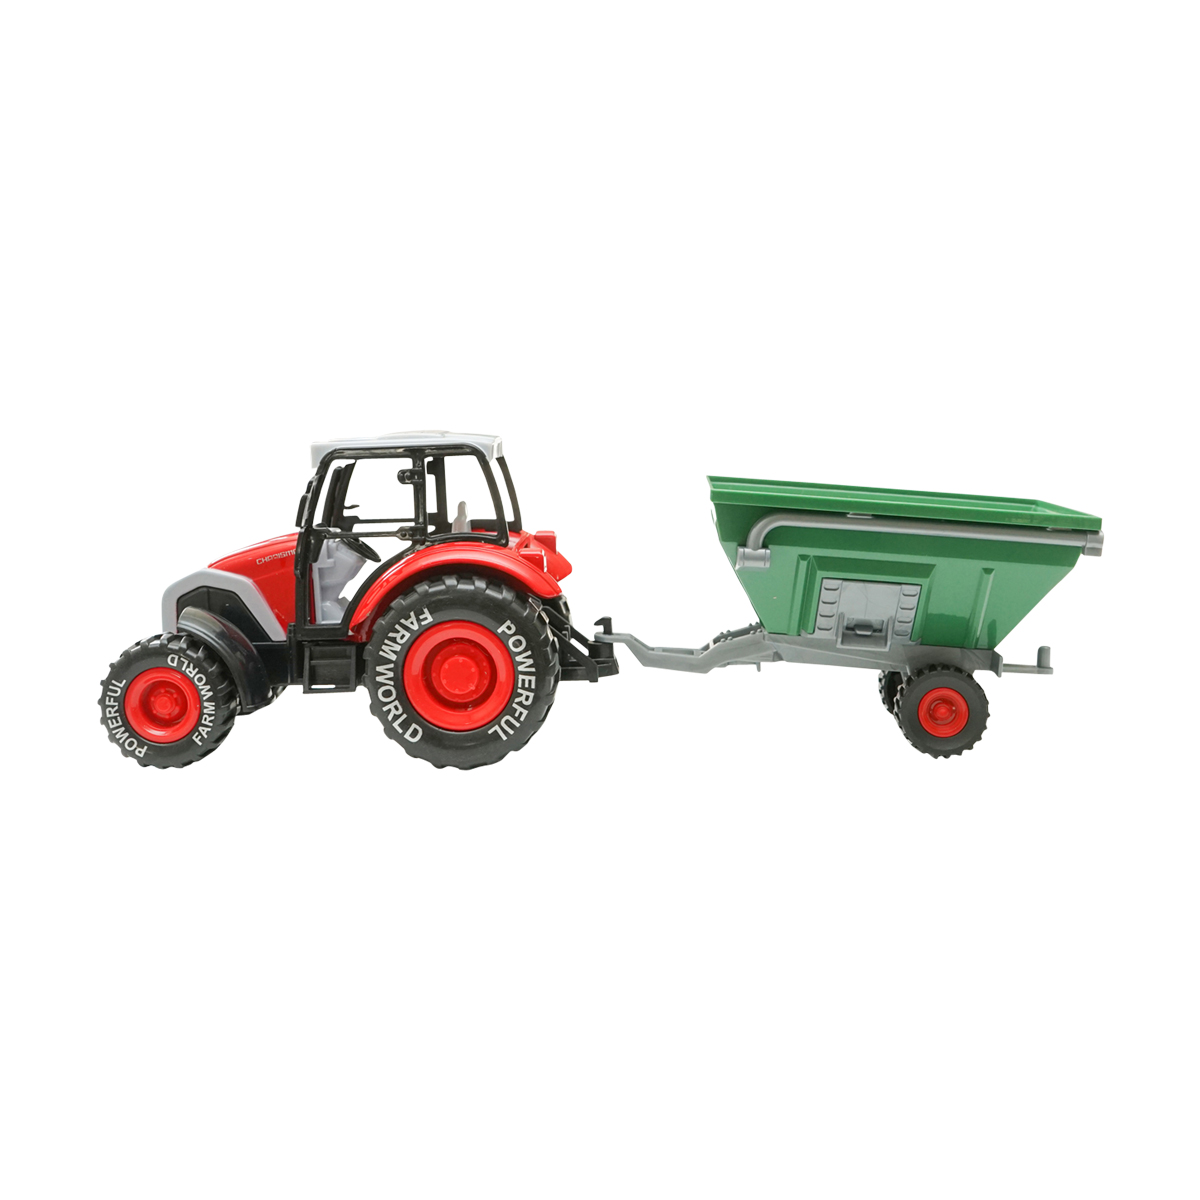 Jucarie tractor rosu pentru ferma cu distribuitor de ingrasaminte Farm Truck